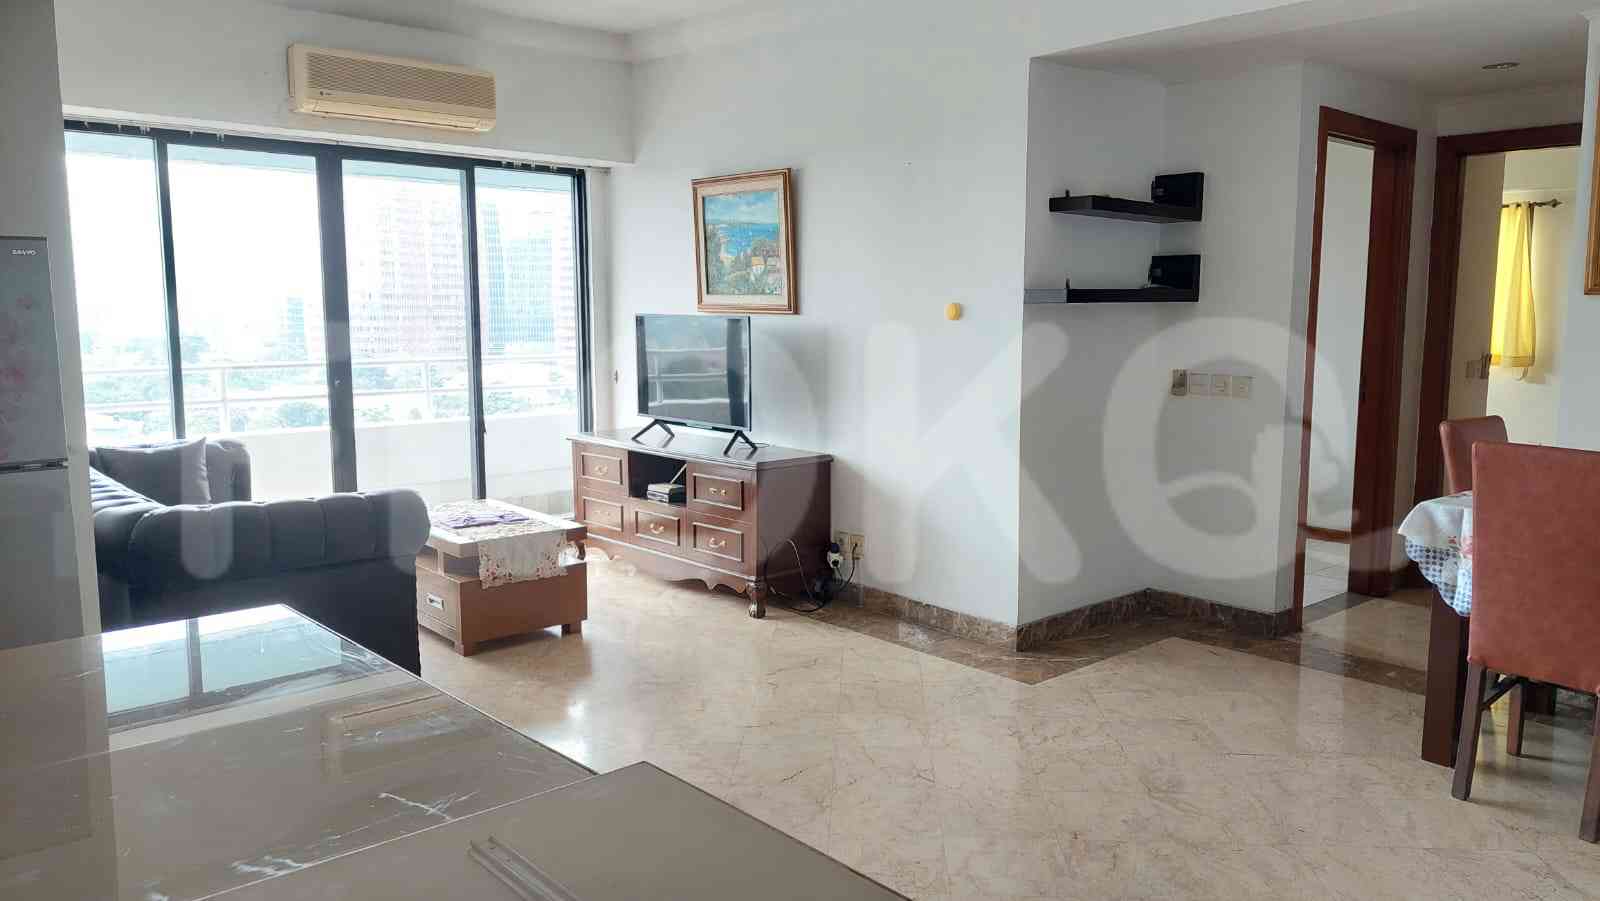 3 Bedroom on 9th Floor for Rent in BonaVista Apartment - fle319 5